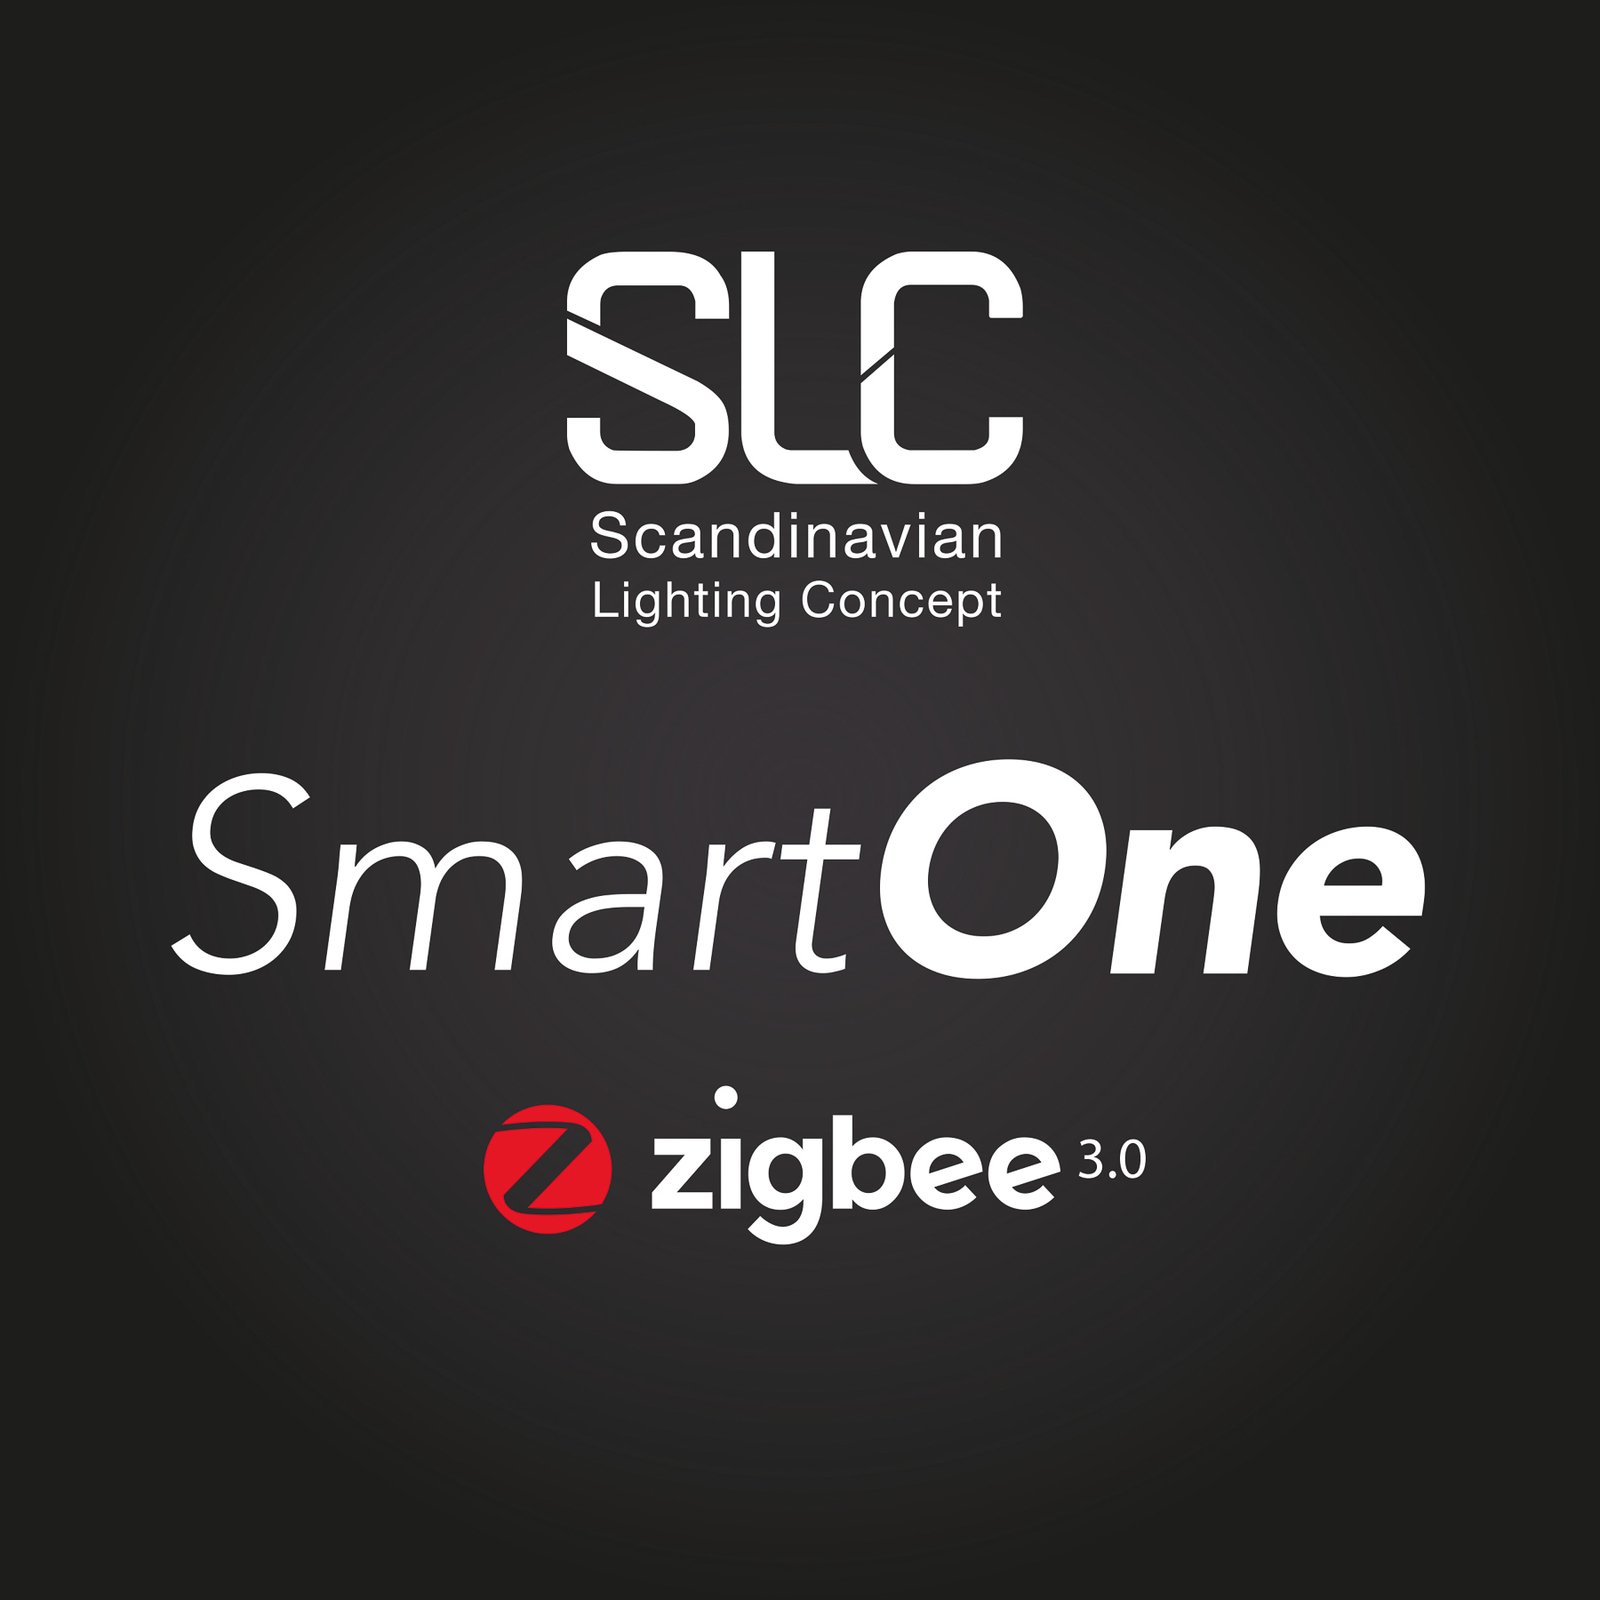 SLC SmartOne napájanie ZigBee CV 24V 75 W PWM RGBW